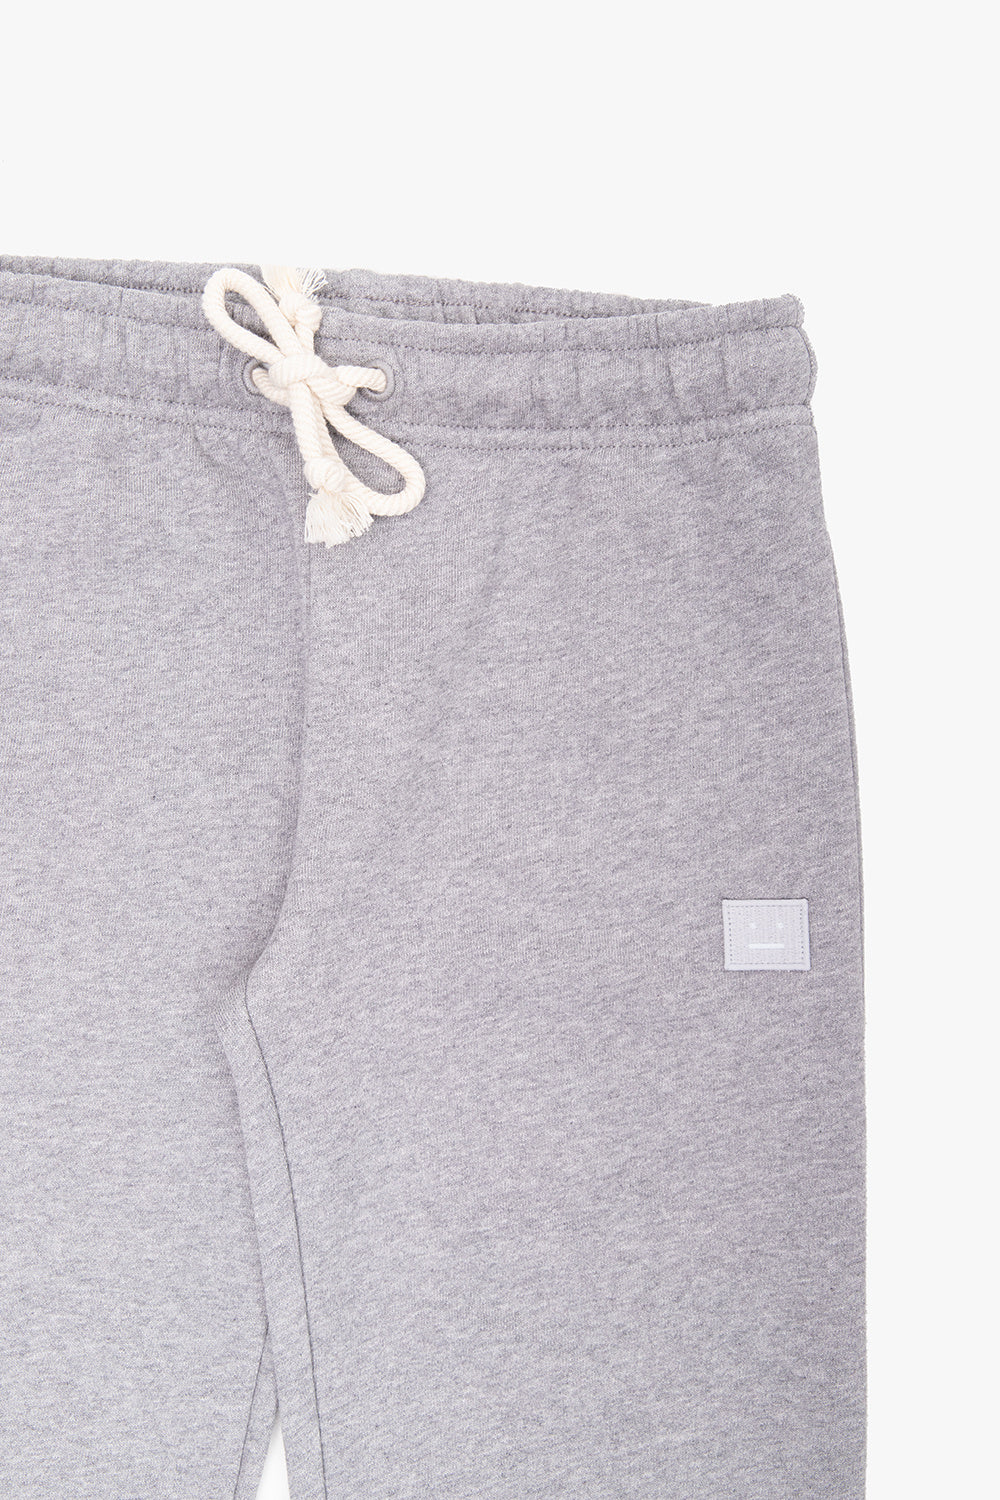 Grey sweatpants with logo